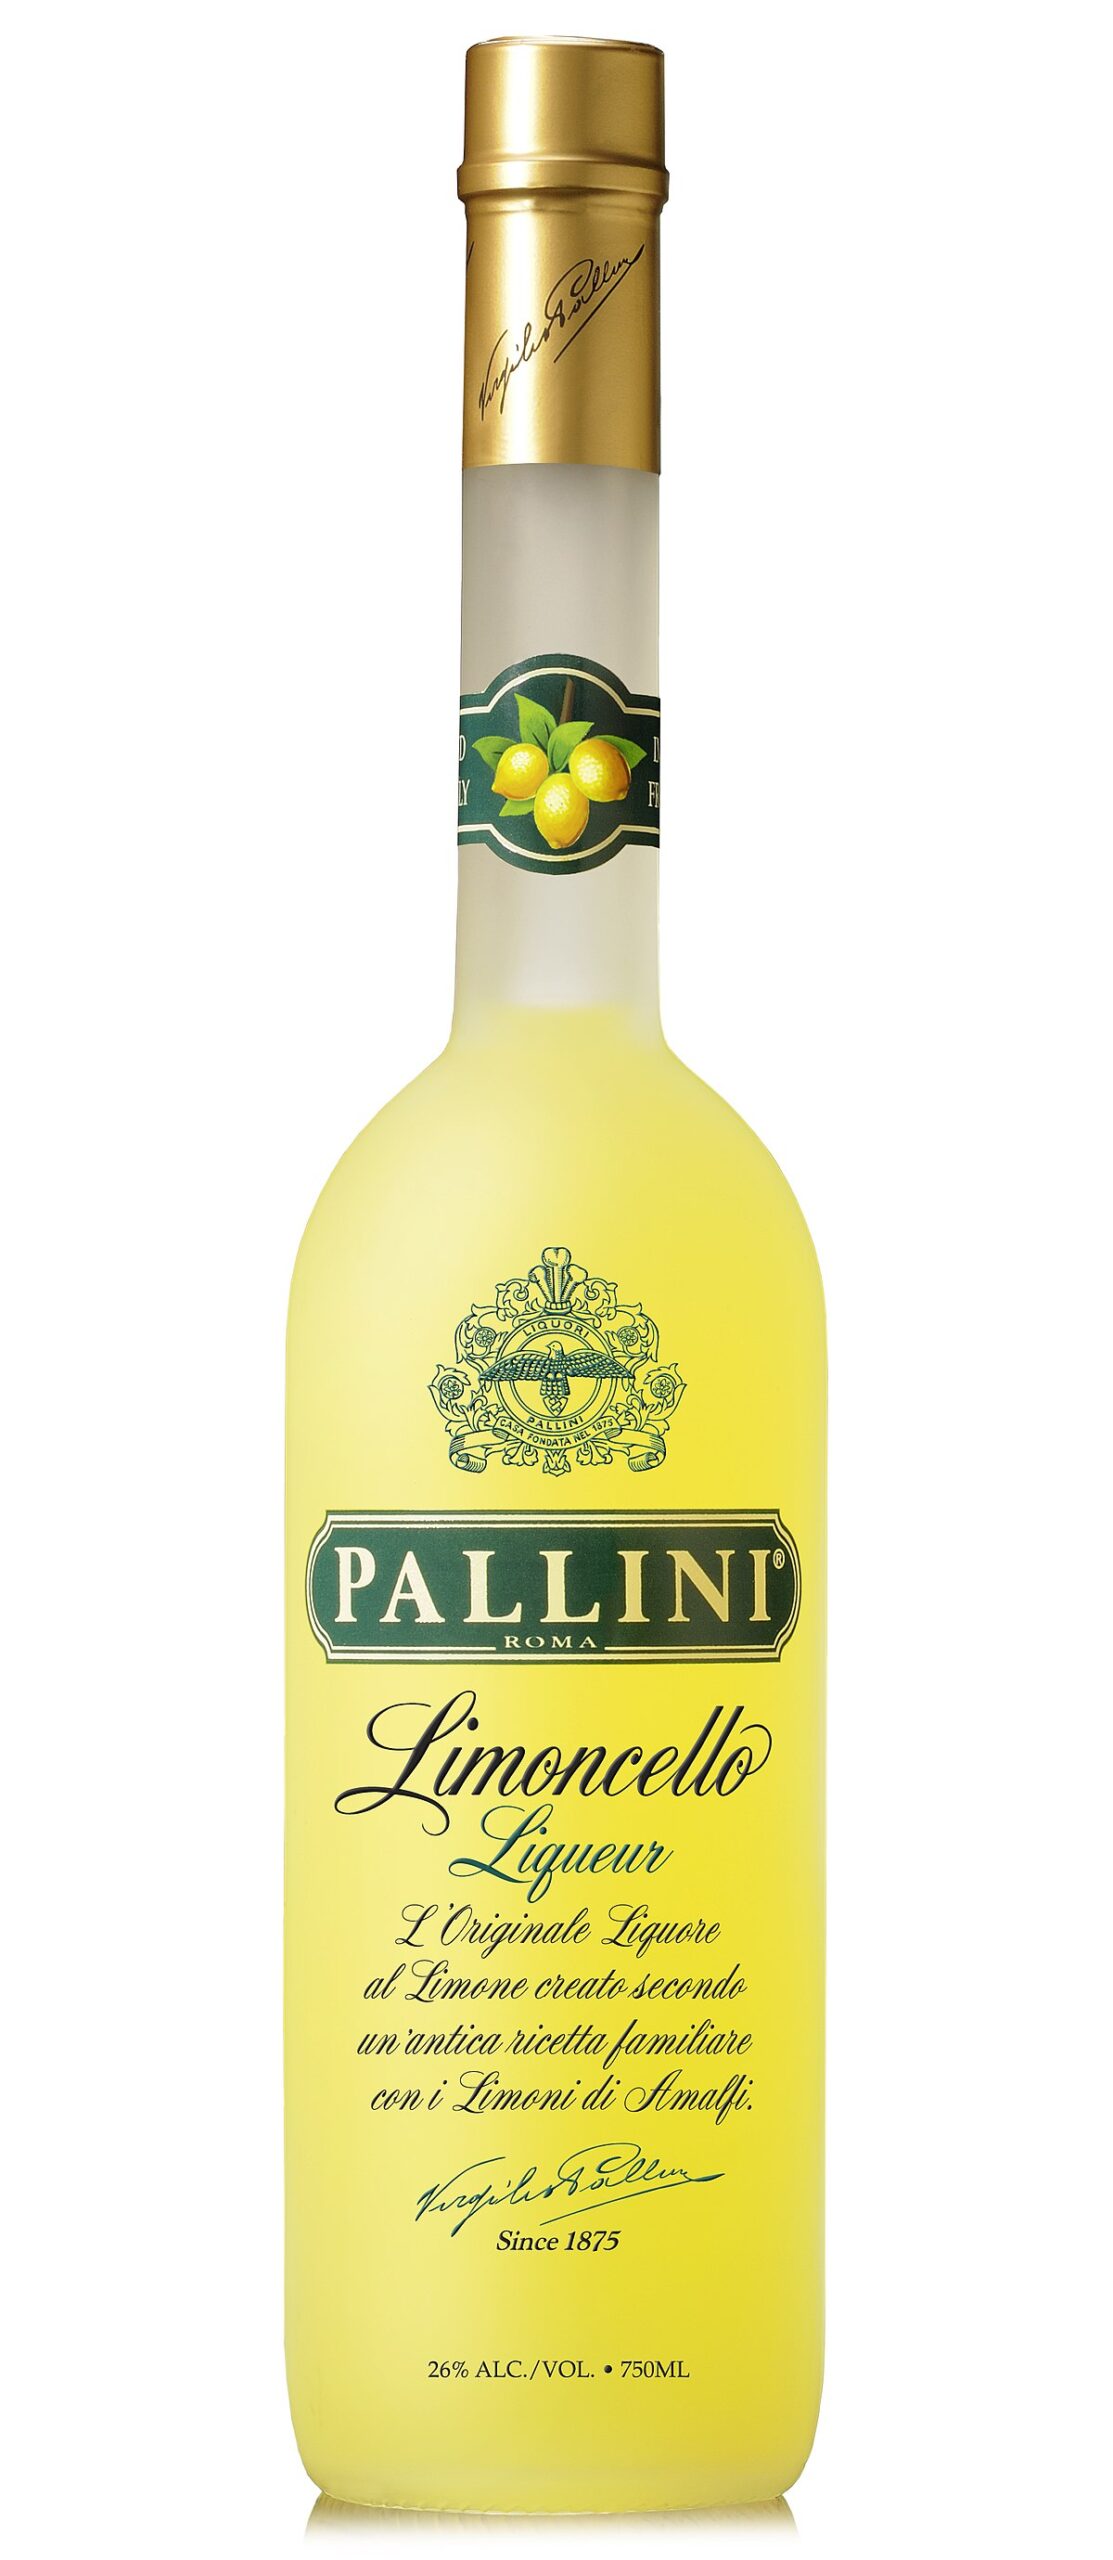 Pallini Limoncello 50cl, 26%